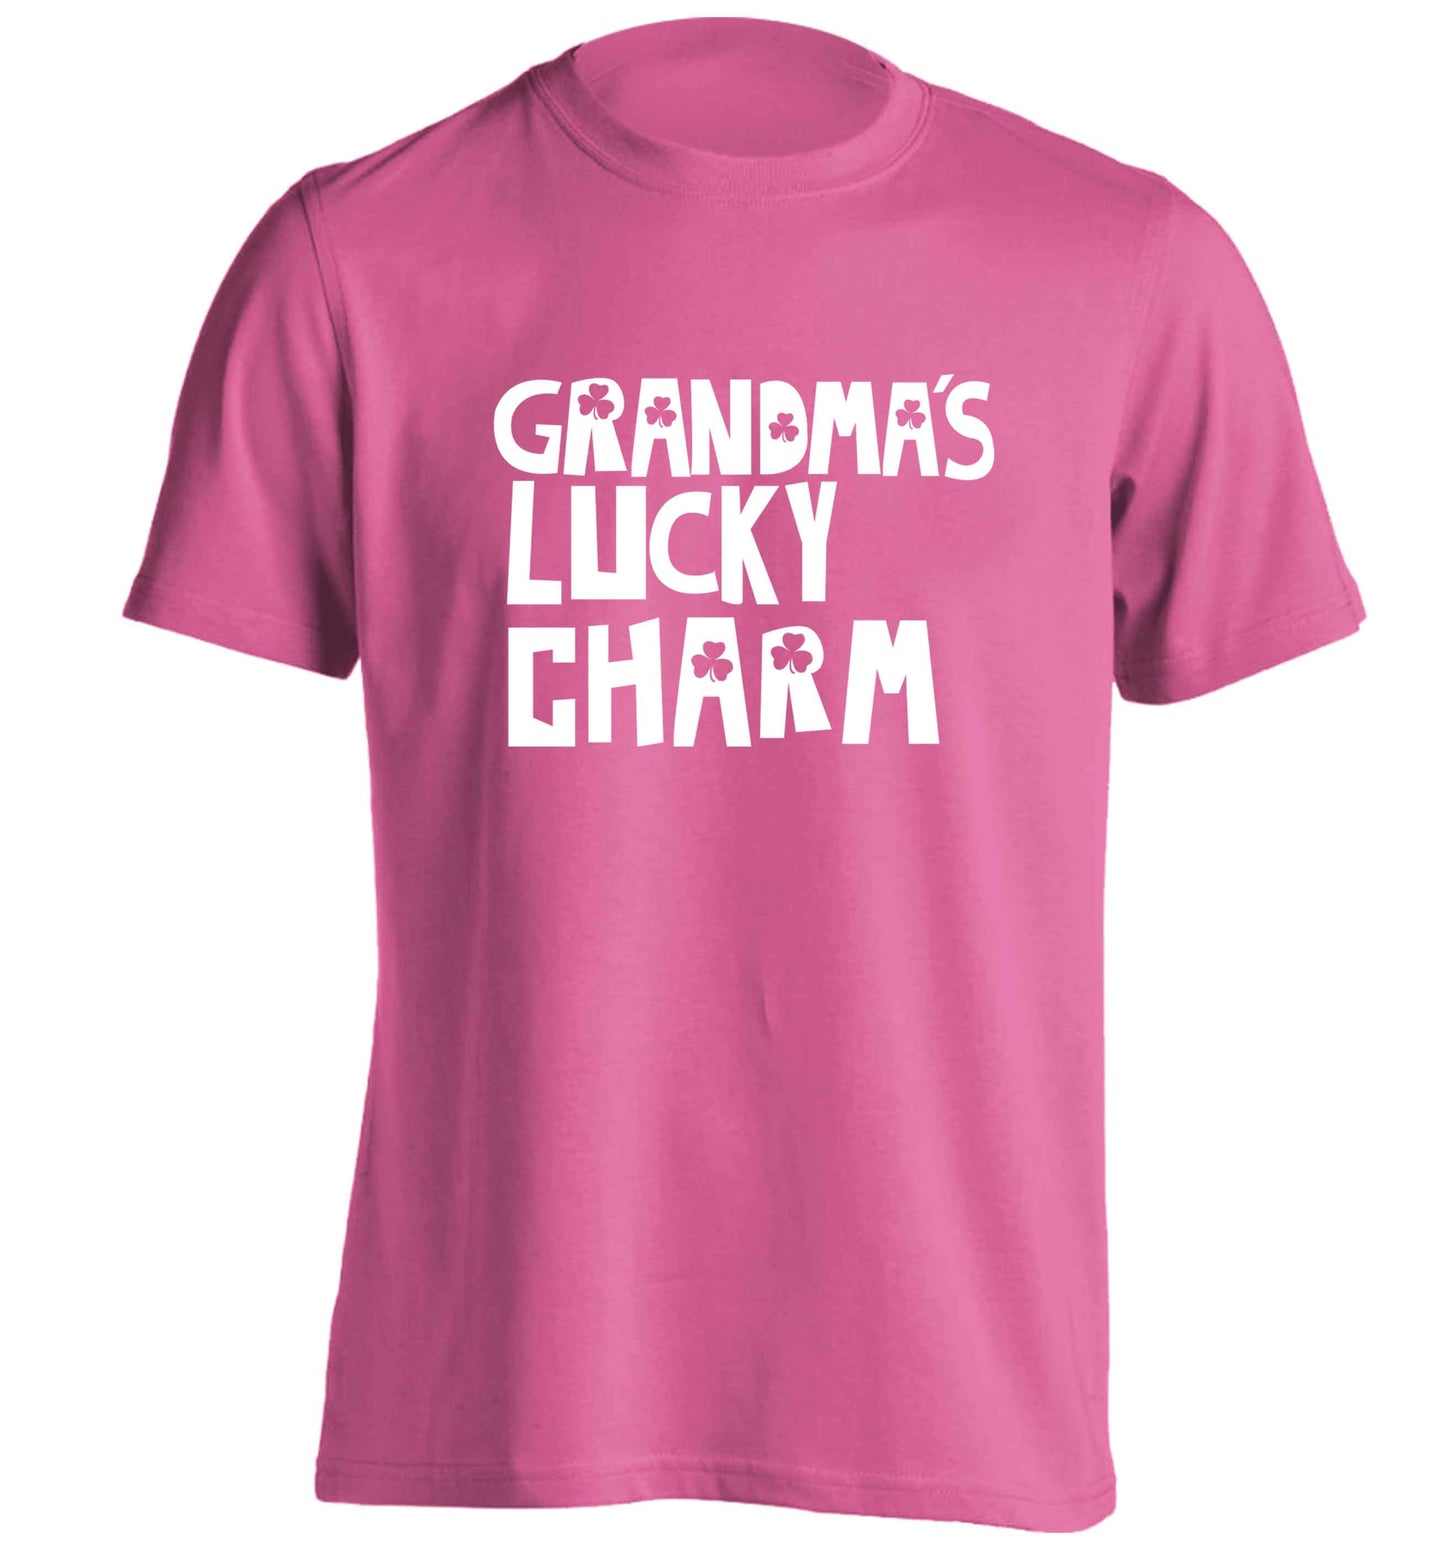 Grandma's lucky charm adults unisex pink Tshirt 2XL